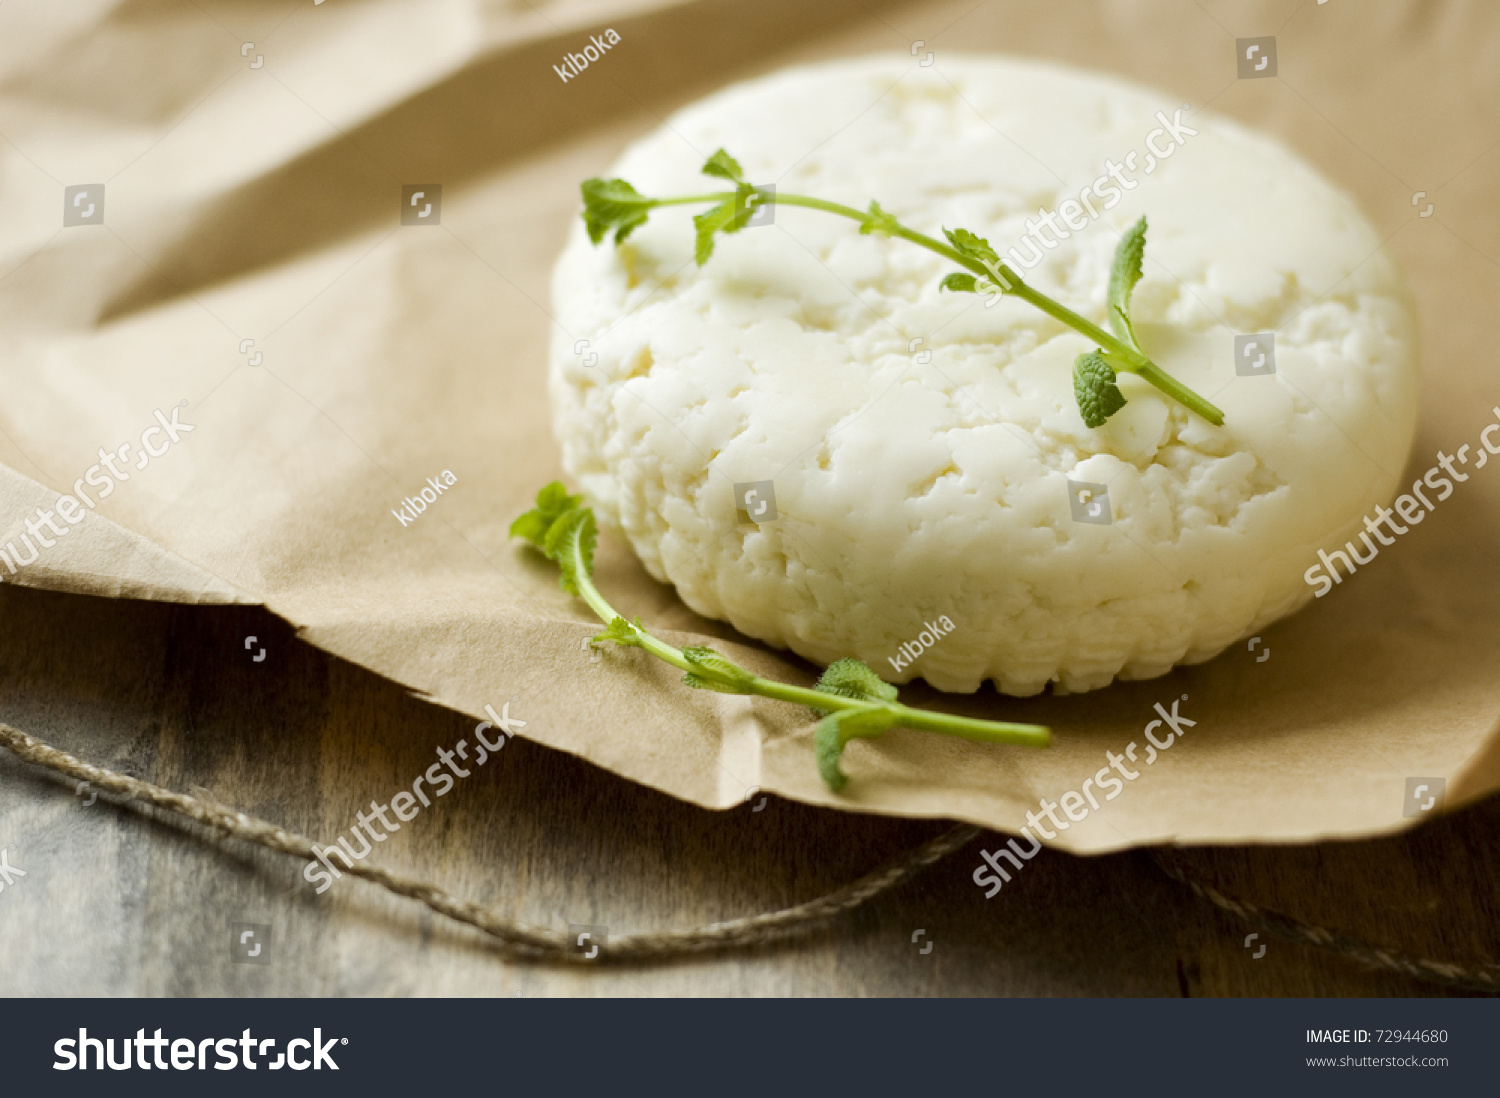 fresh feta cheese on wooden board #72944680